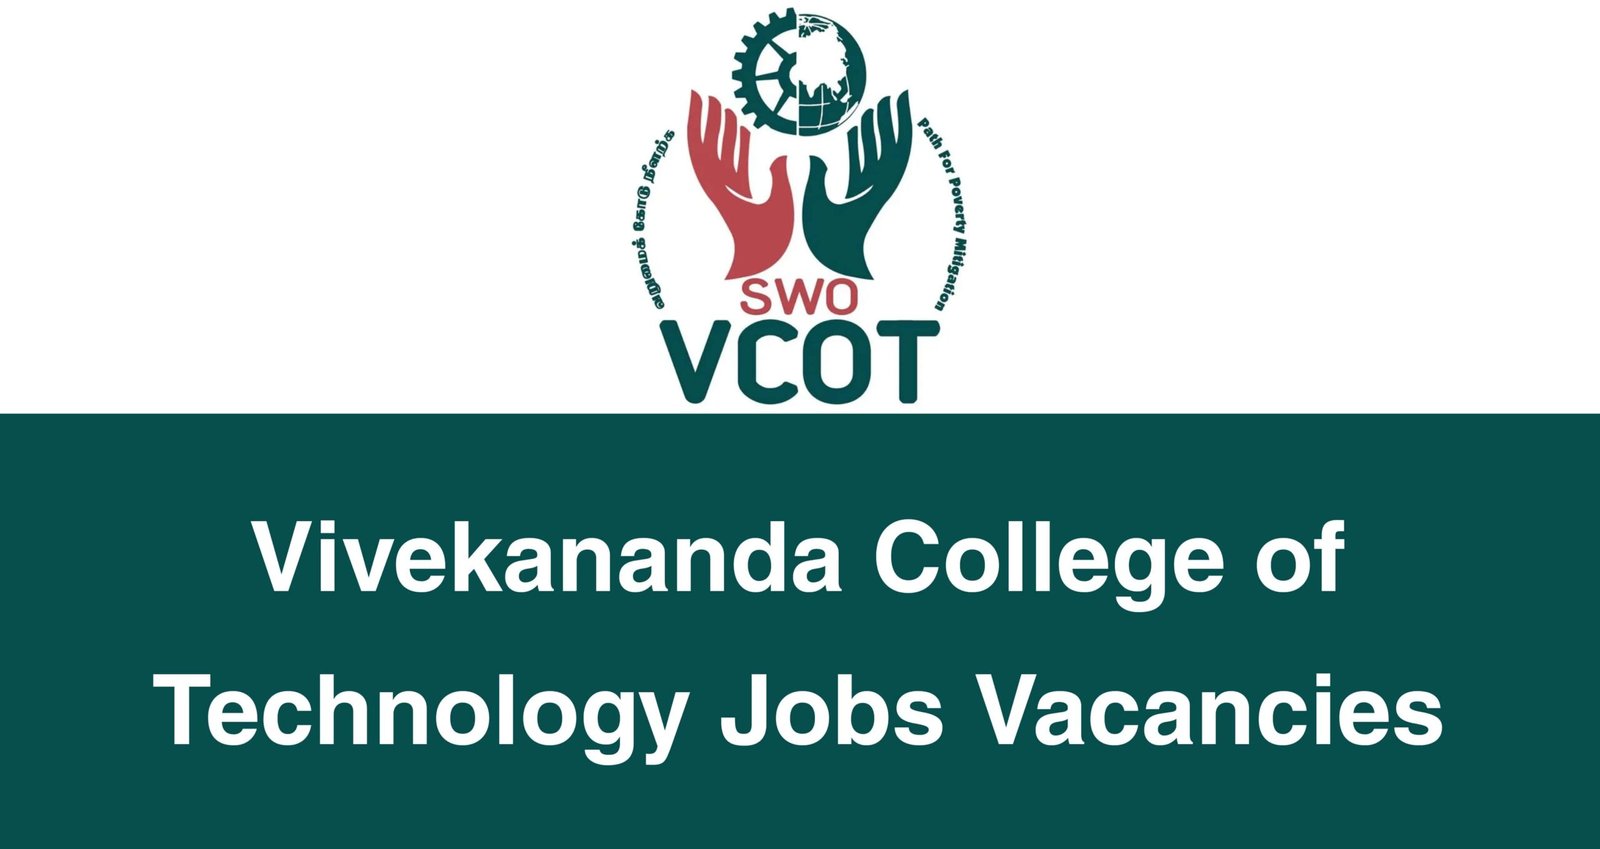 Vivekananda College of Technology Jobs Vacancies